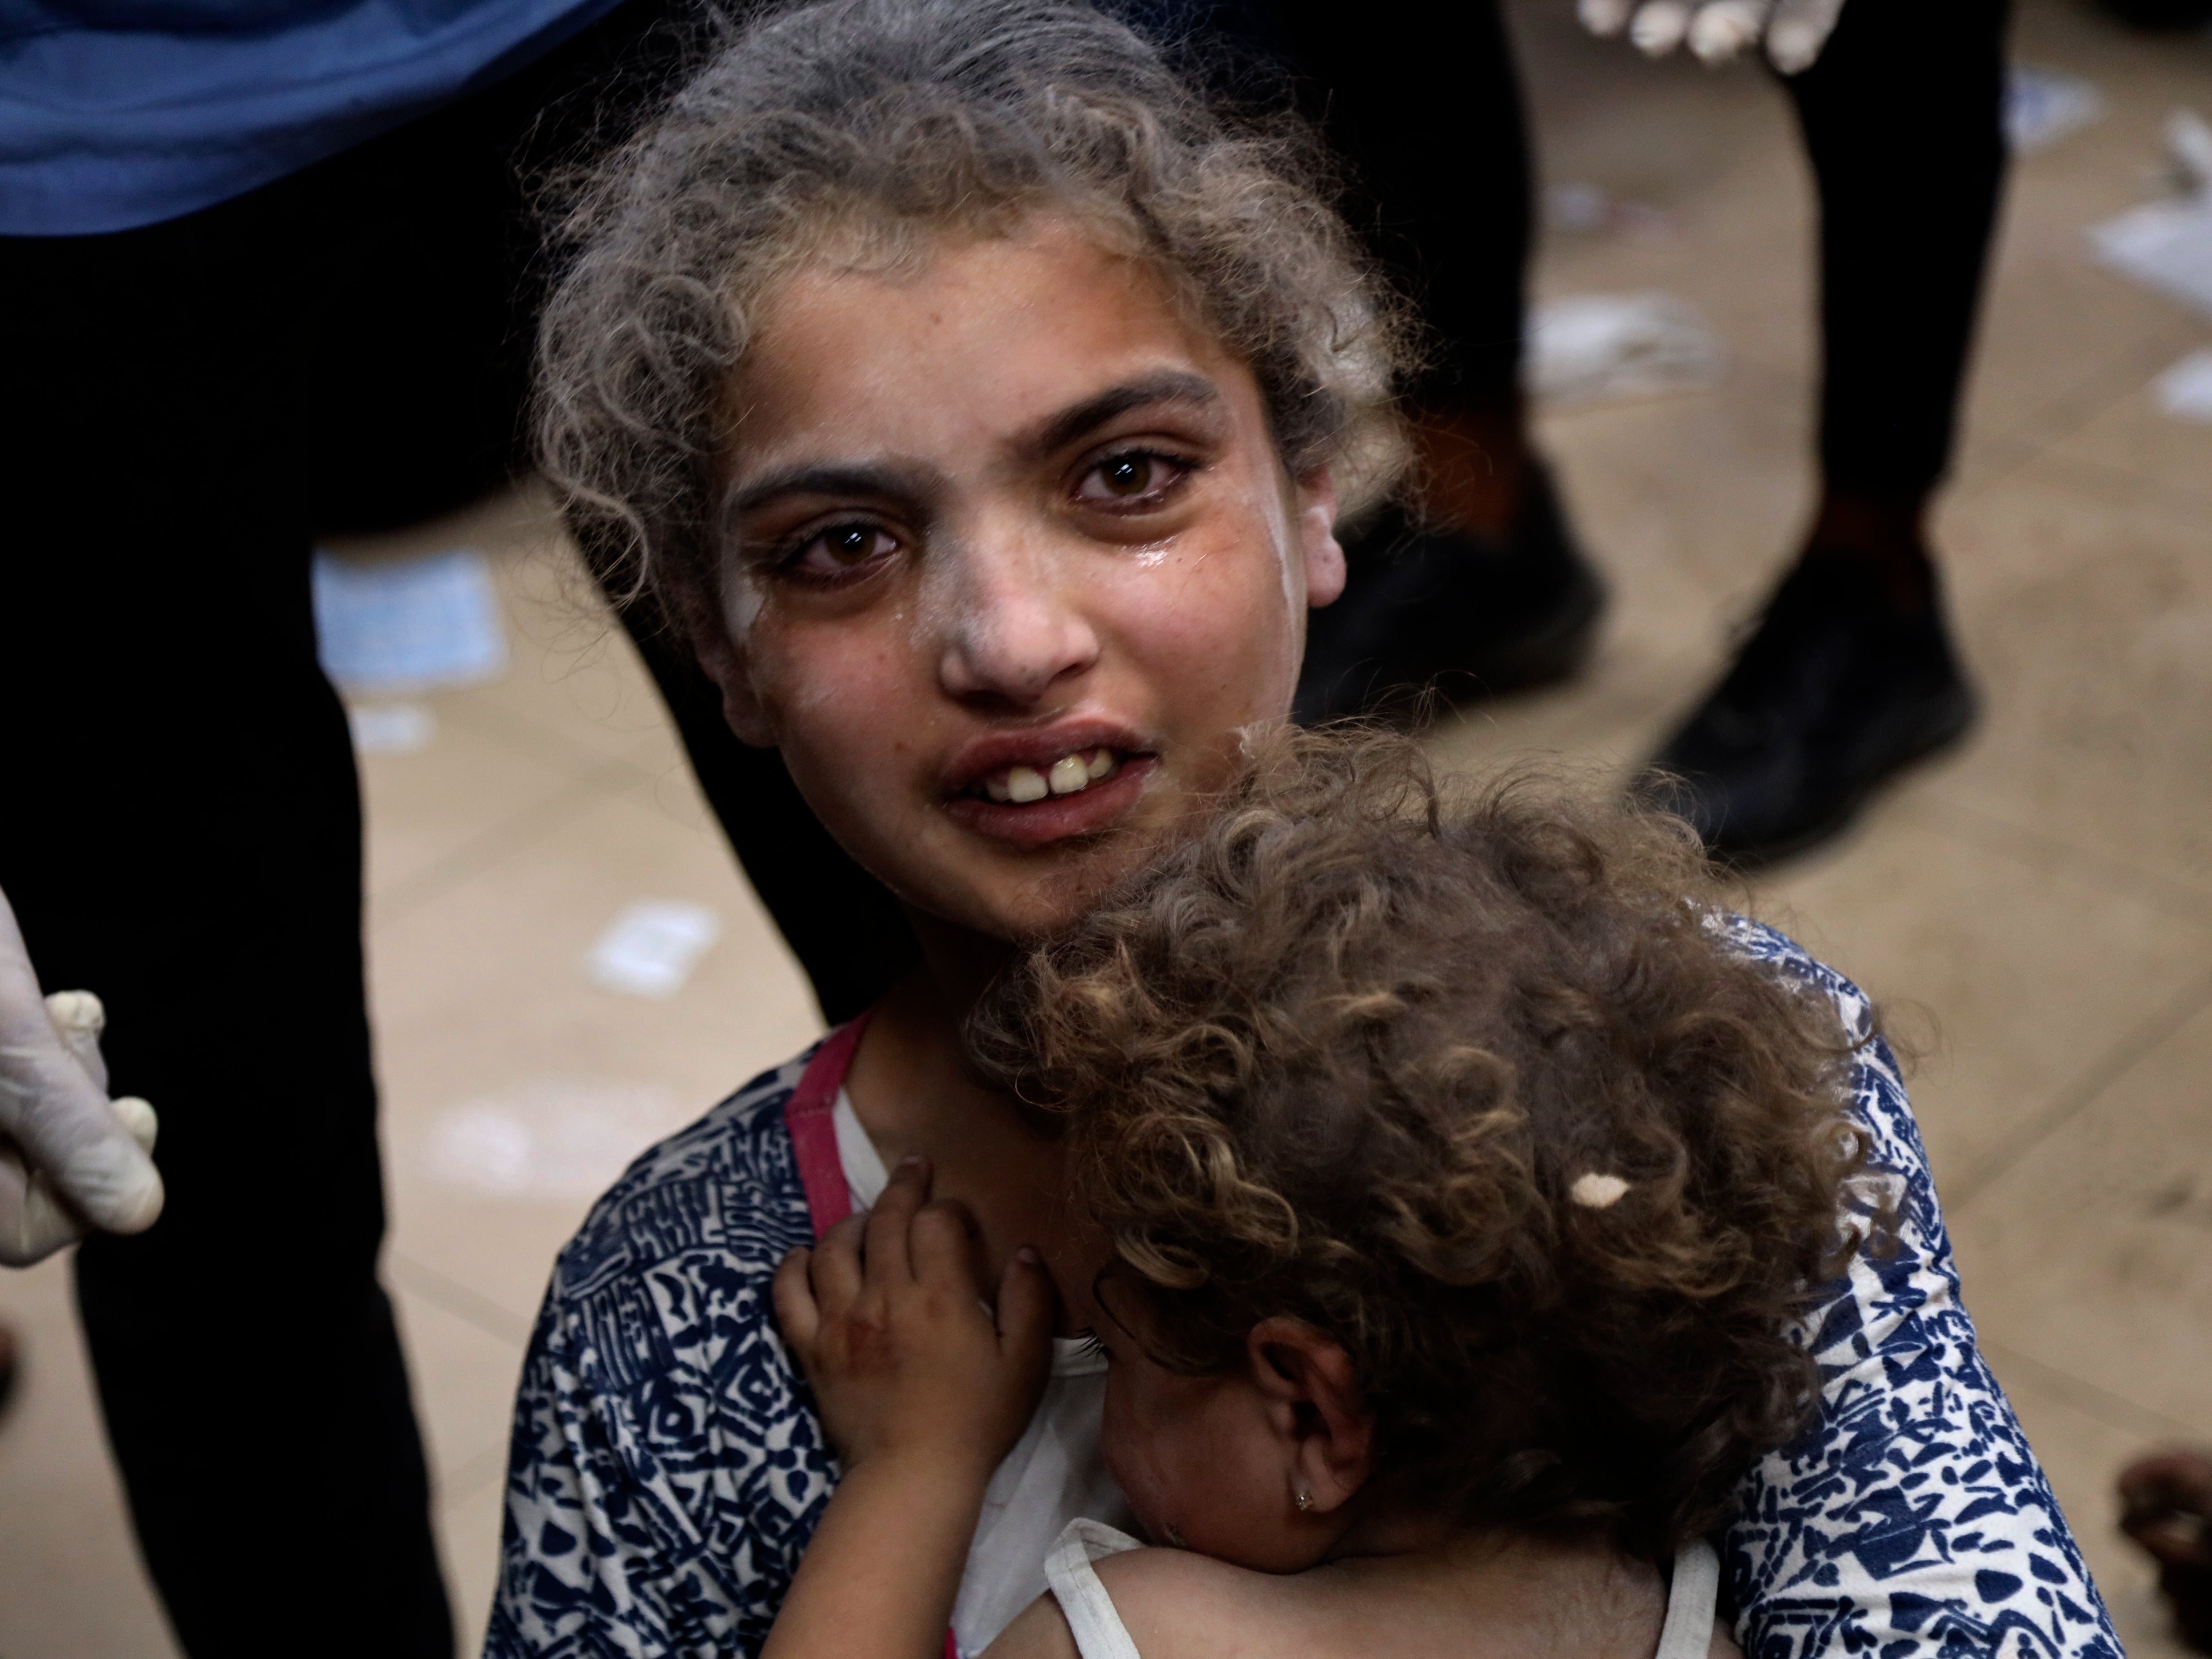 Palestinian children wounded in Israeli bombardment in Bureij refugee camp